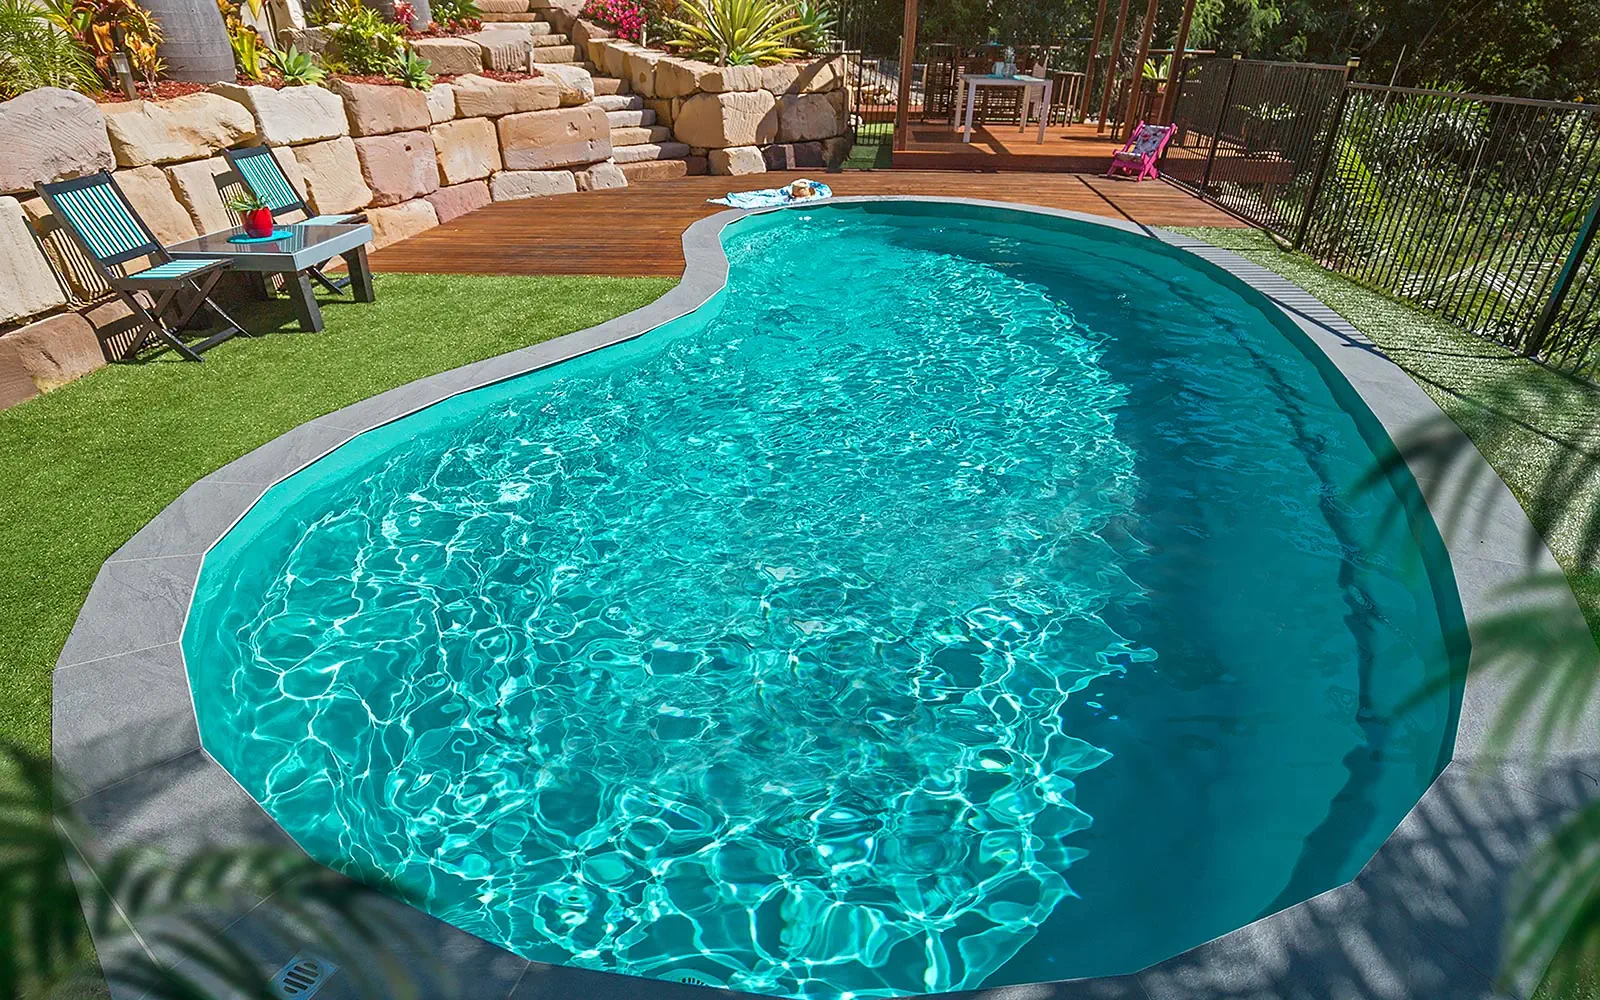 The Tuscany kidney-shaped fibreglass swimming pool